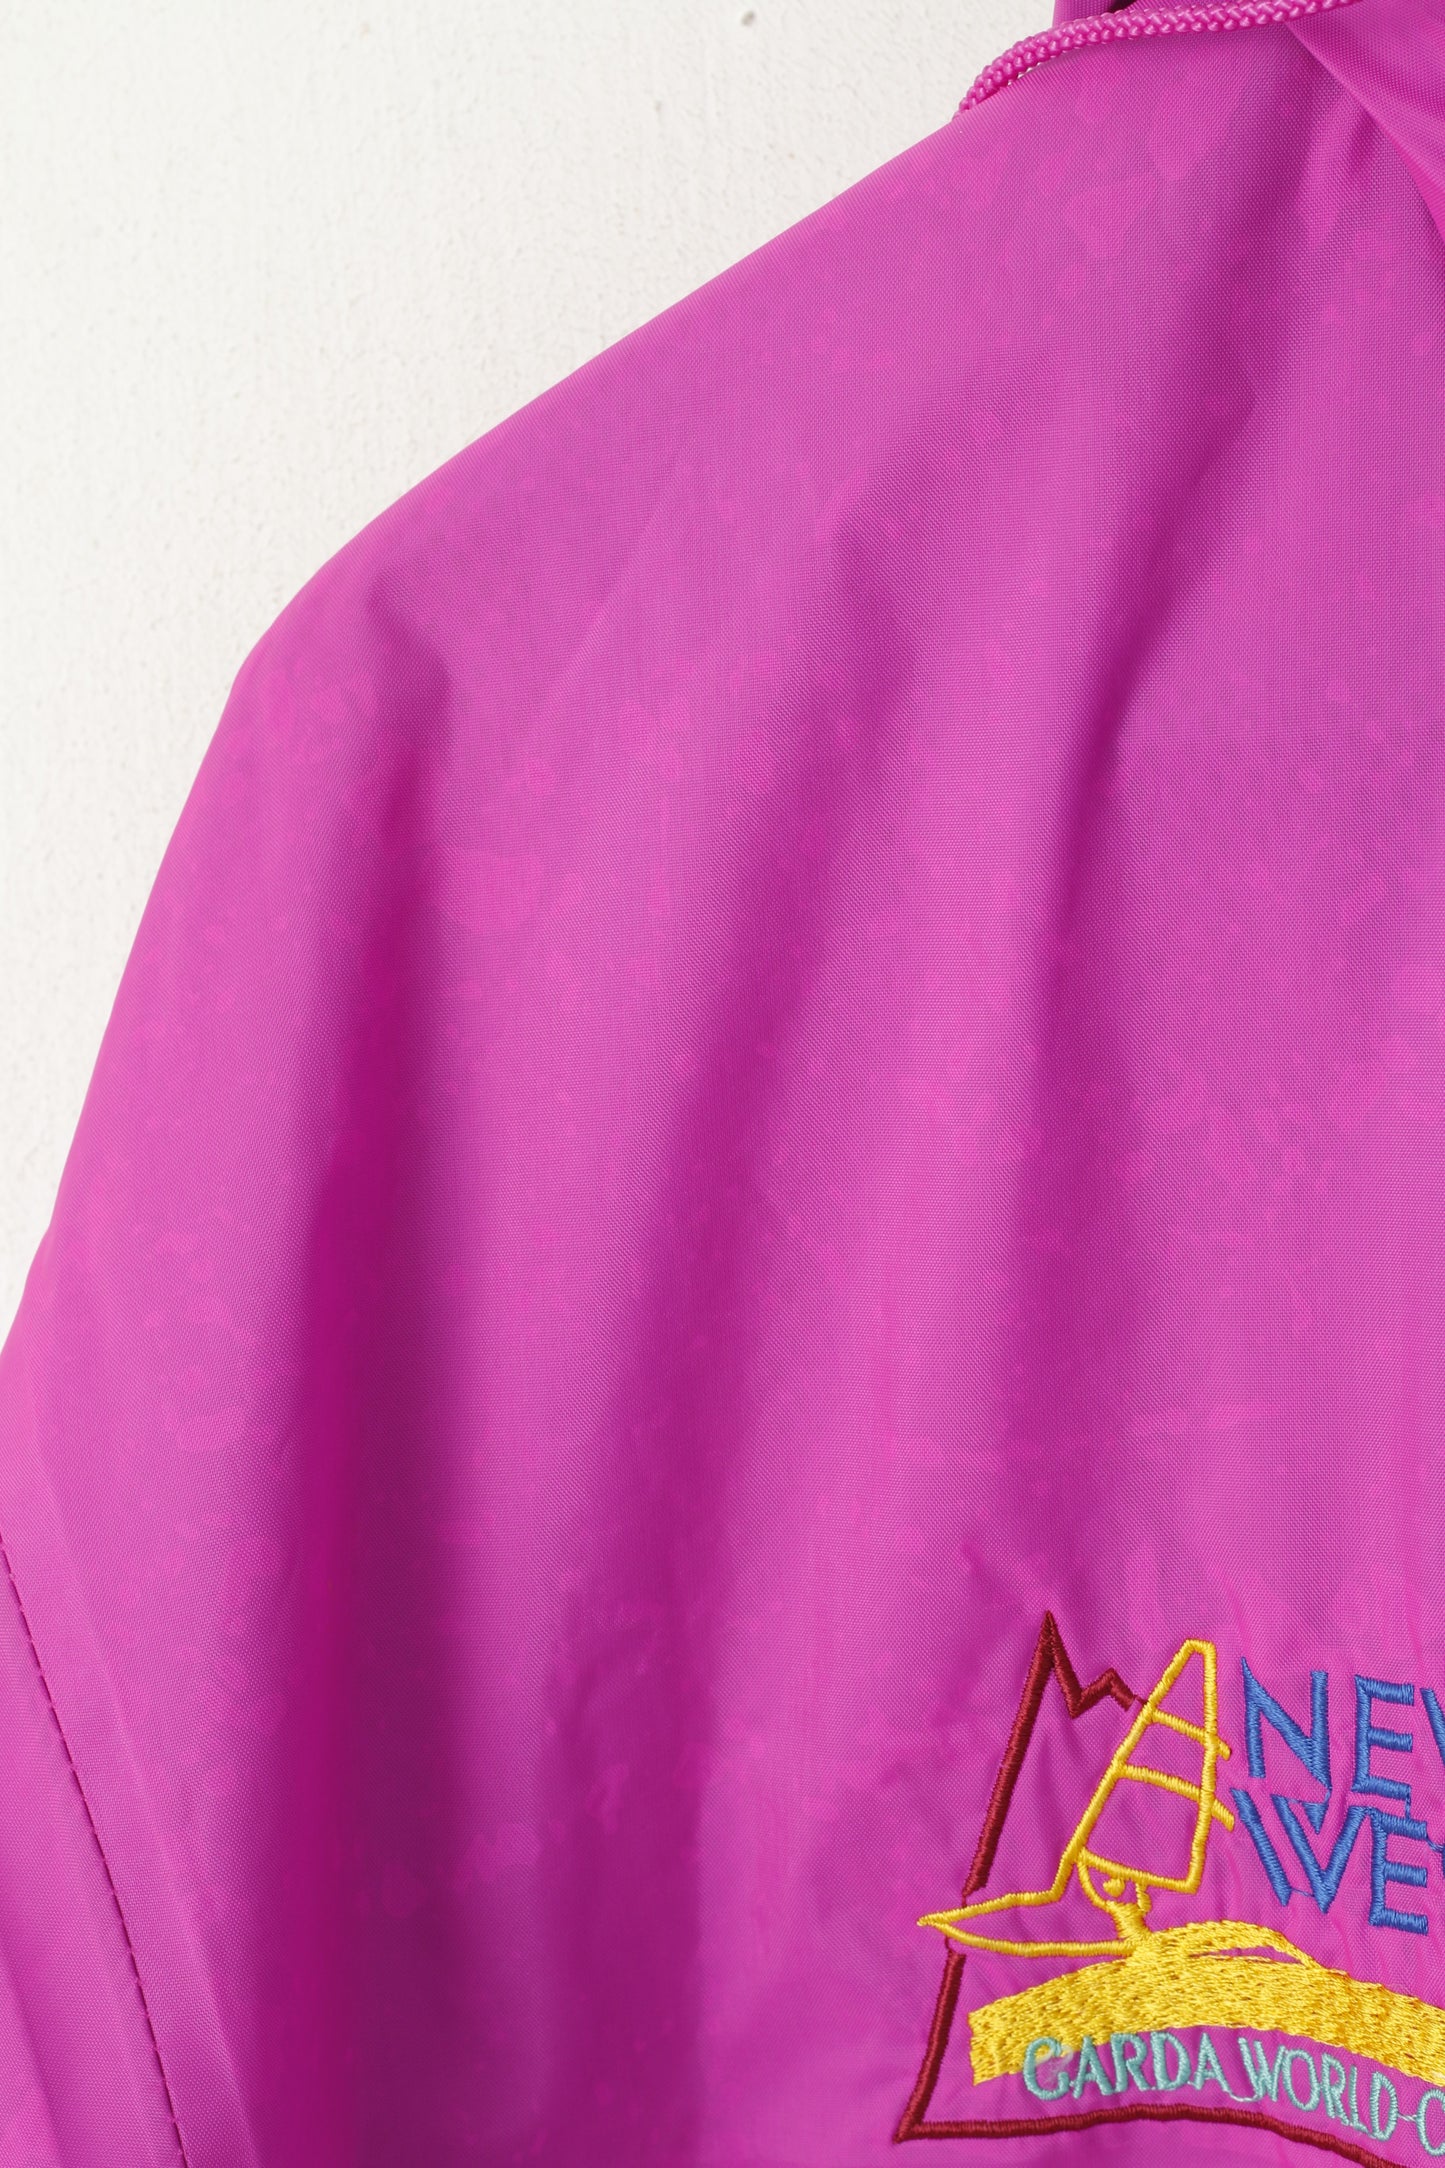 Slam Men M Jacket Pink Sportswear Hooded Garda World -Cup Nylon Outdoor Top